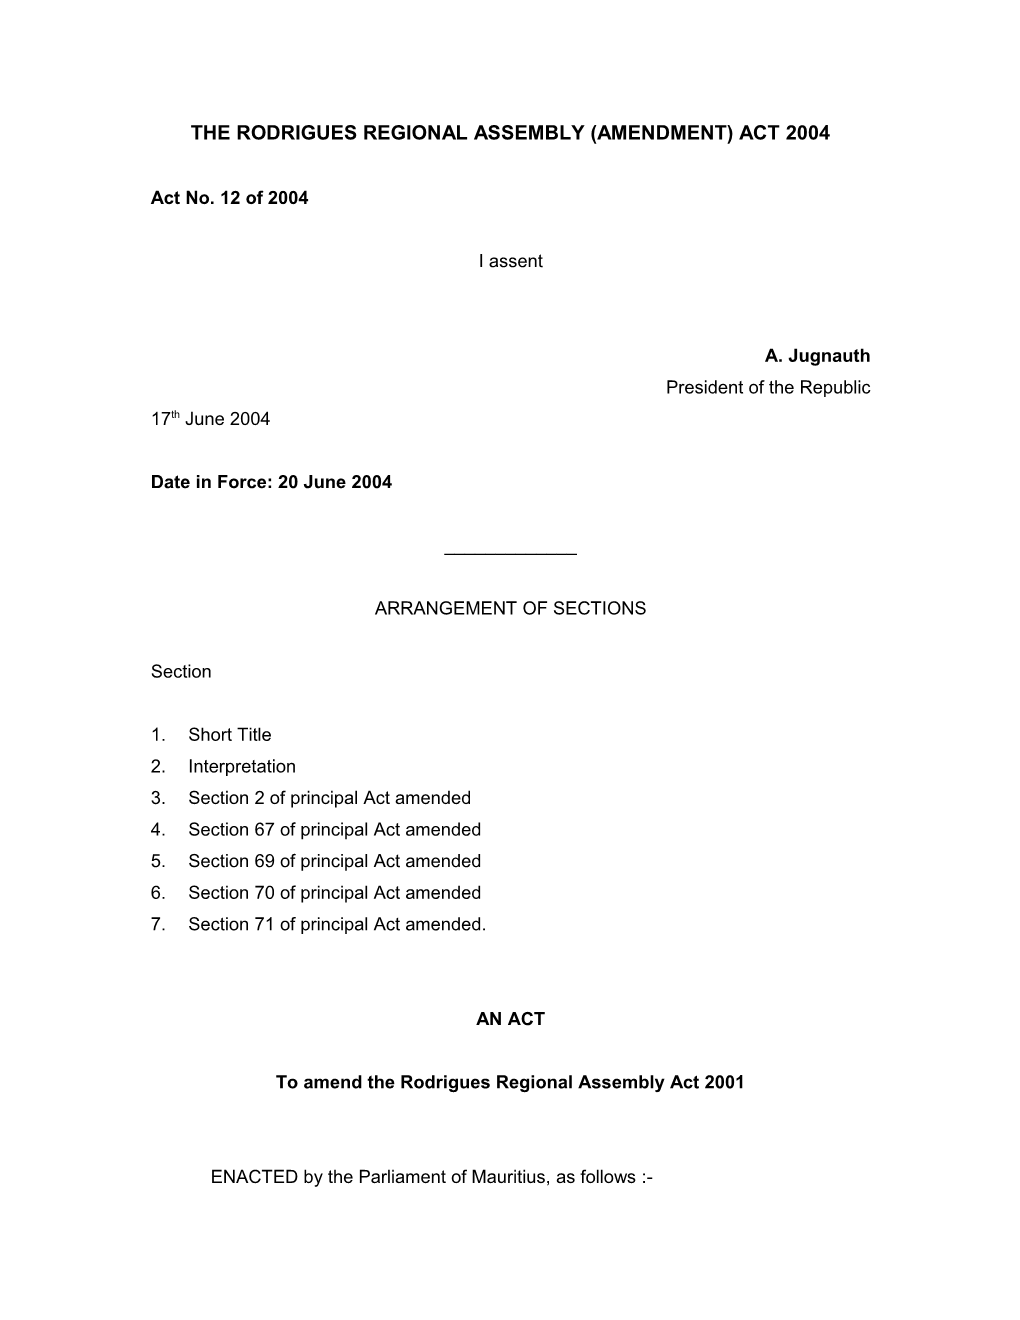 The Rodrigues Regional Assembly (Amendment) Act 2004